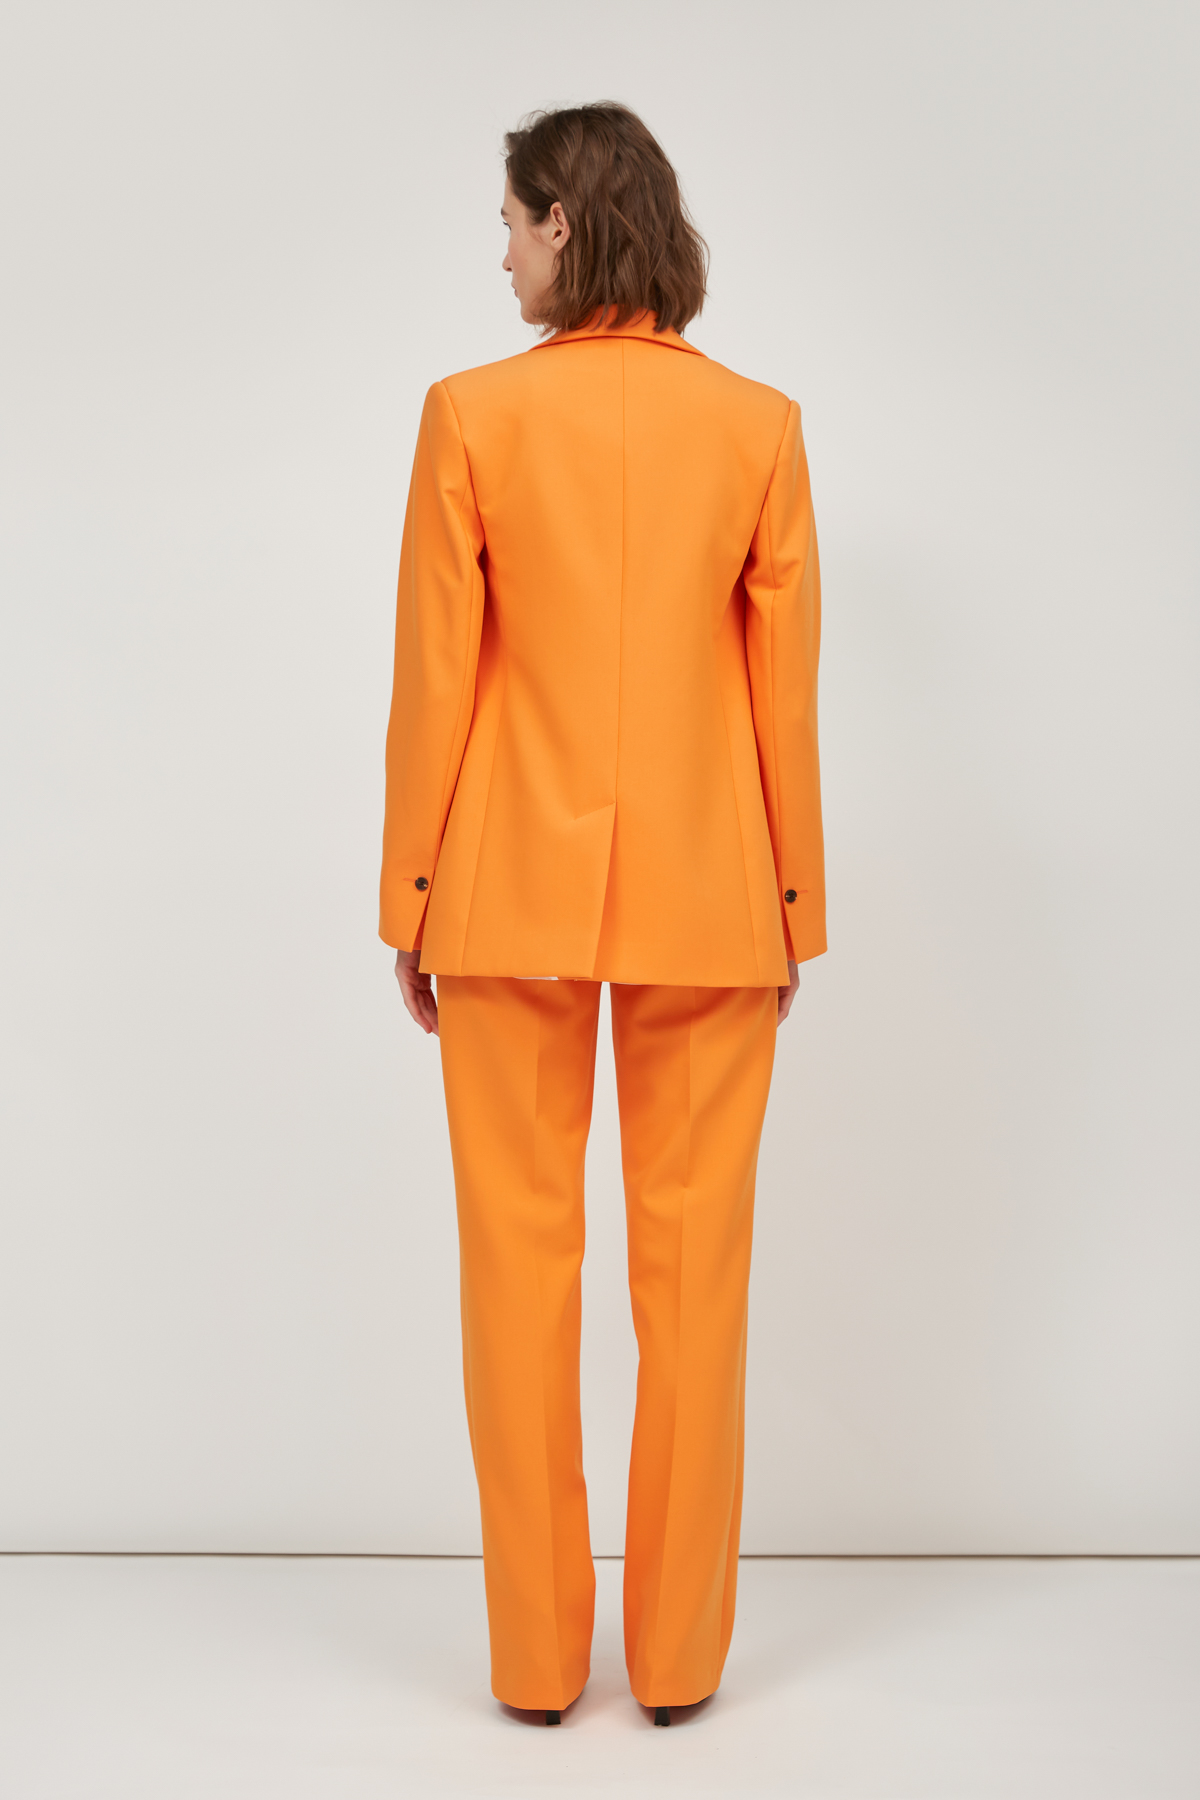 Single-breasted straight-cut orange jacket, photo 6